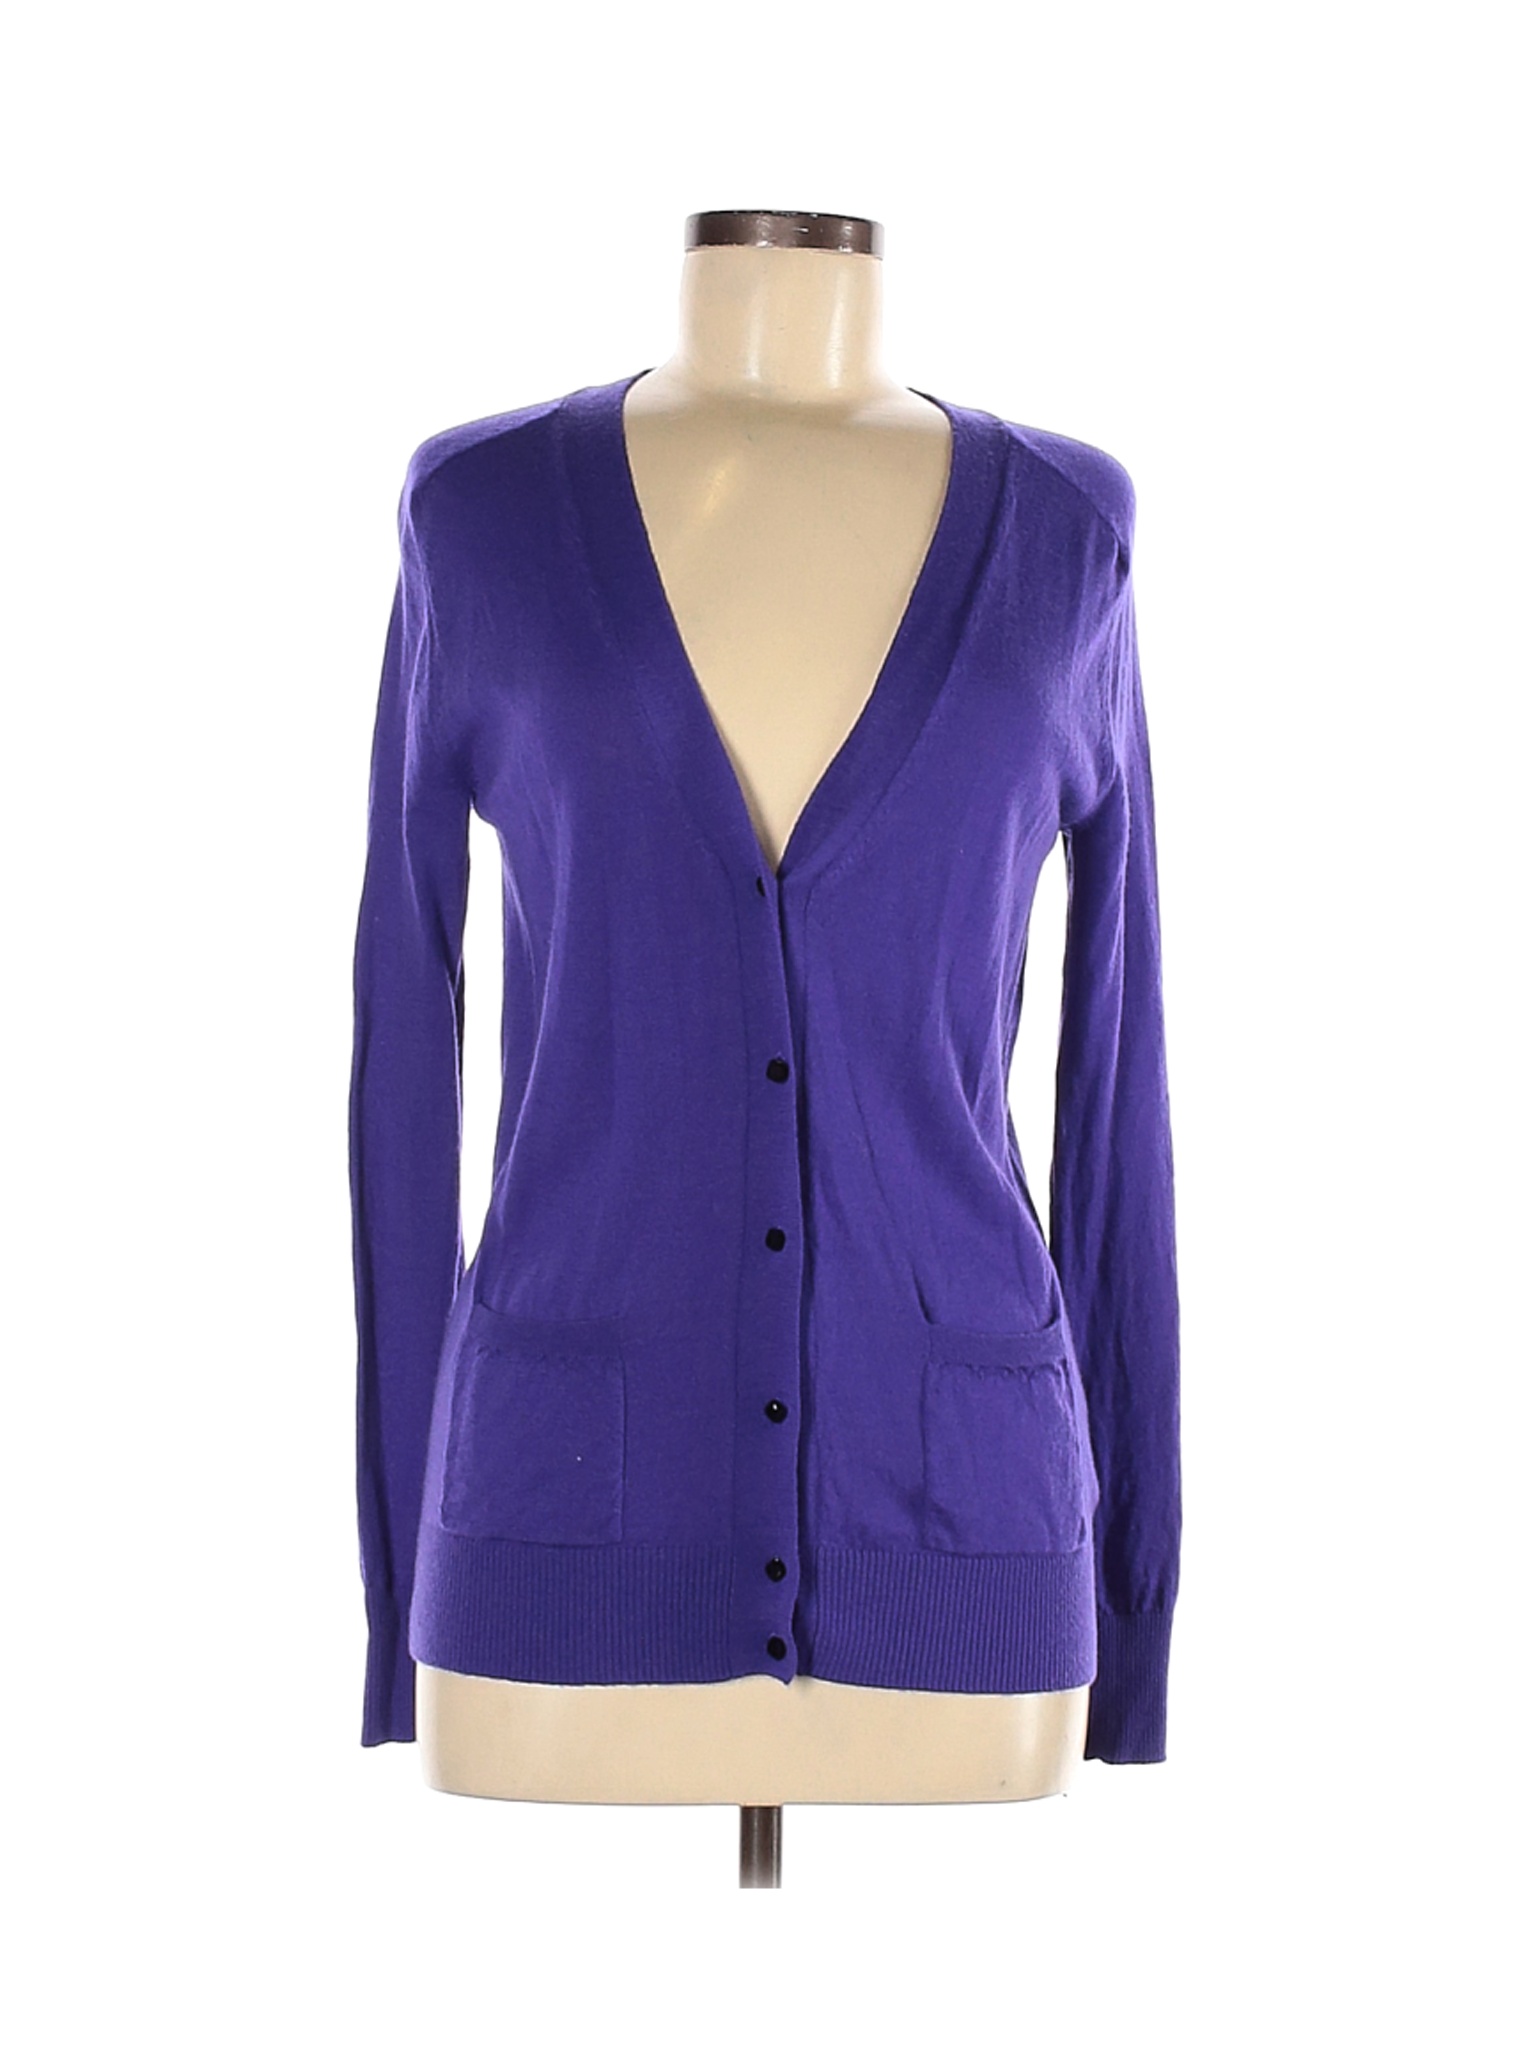 J.Crew Women Purple Wool Cardigan M | eBay